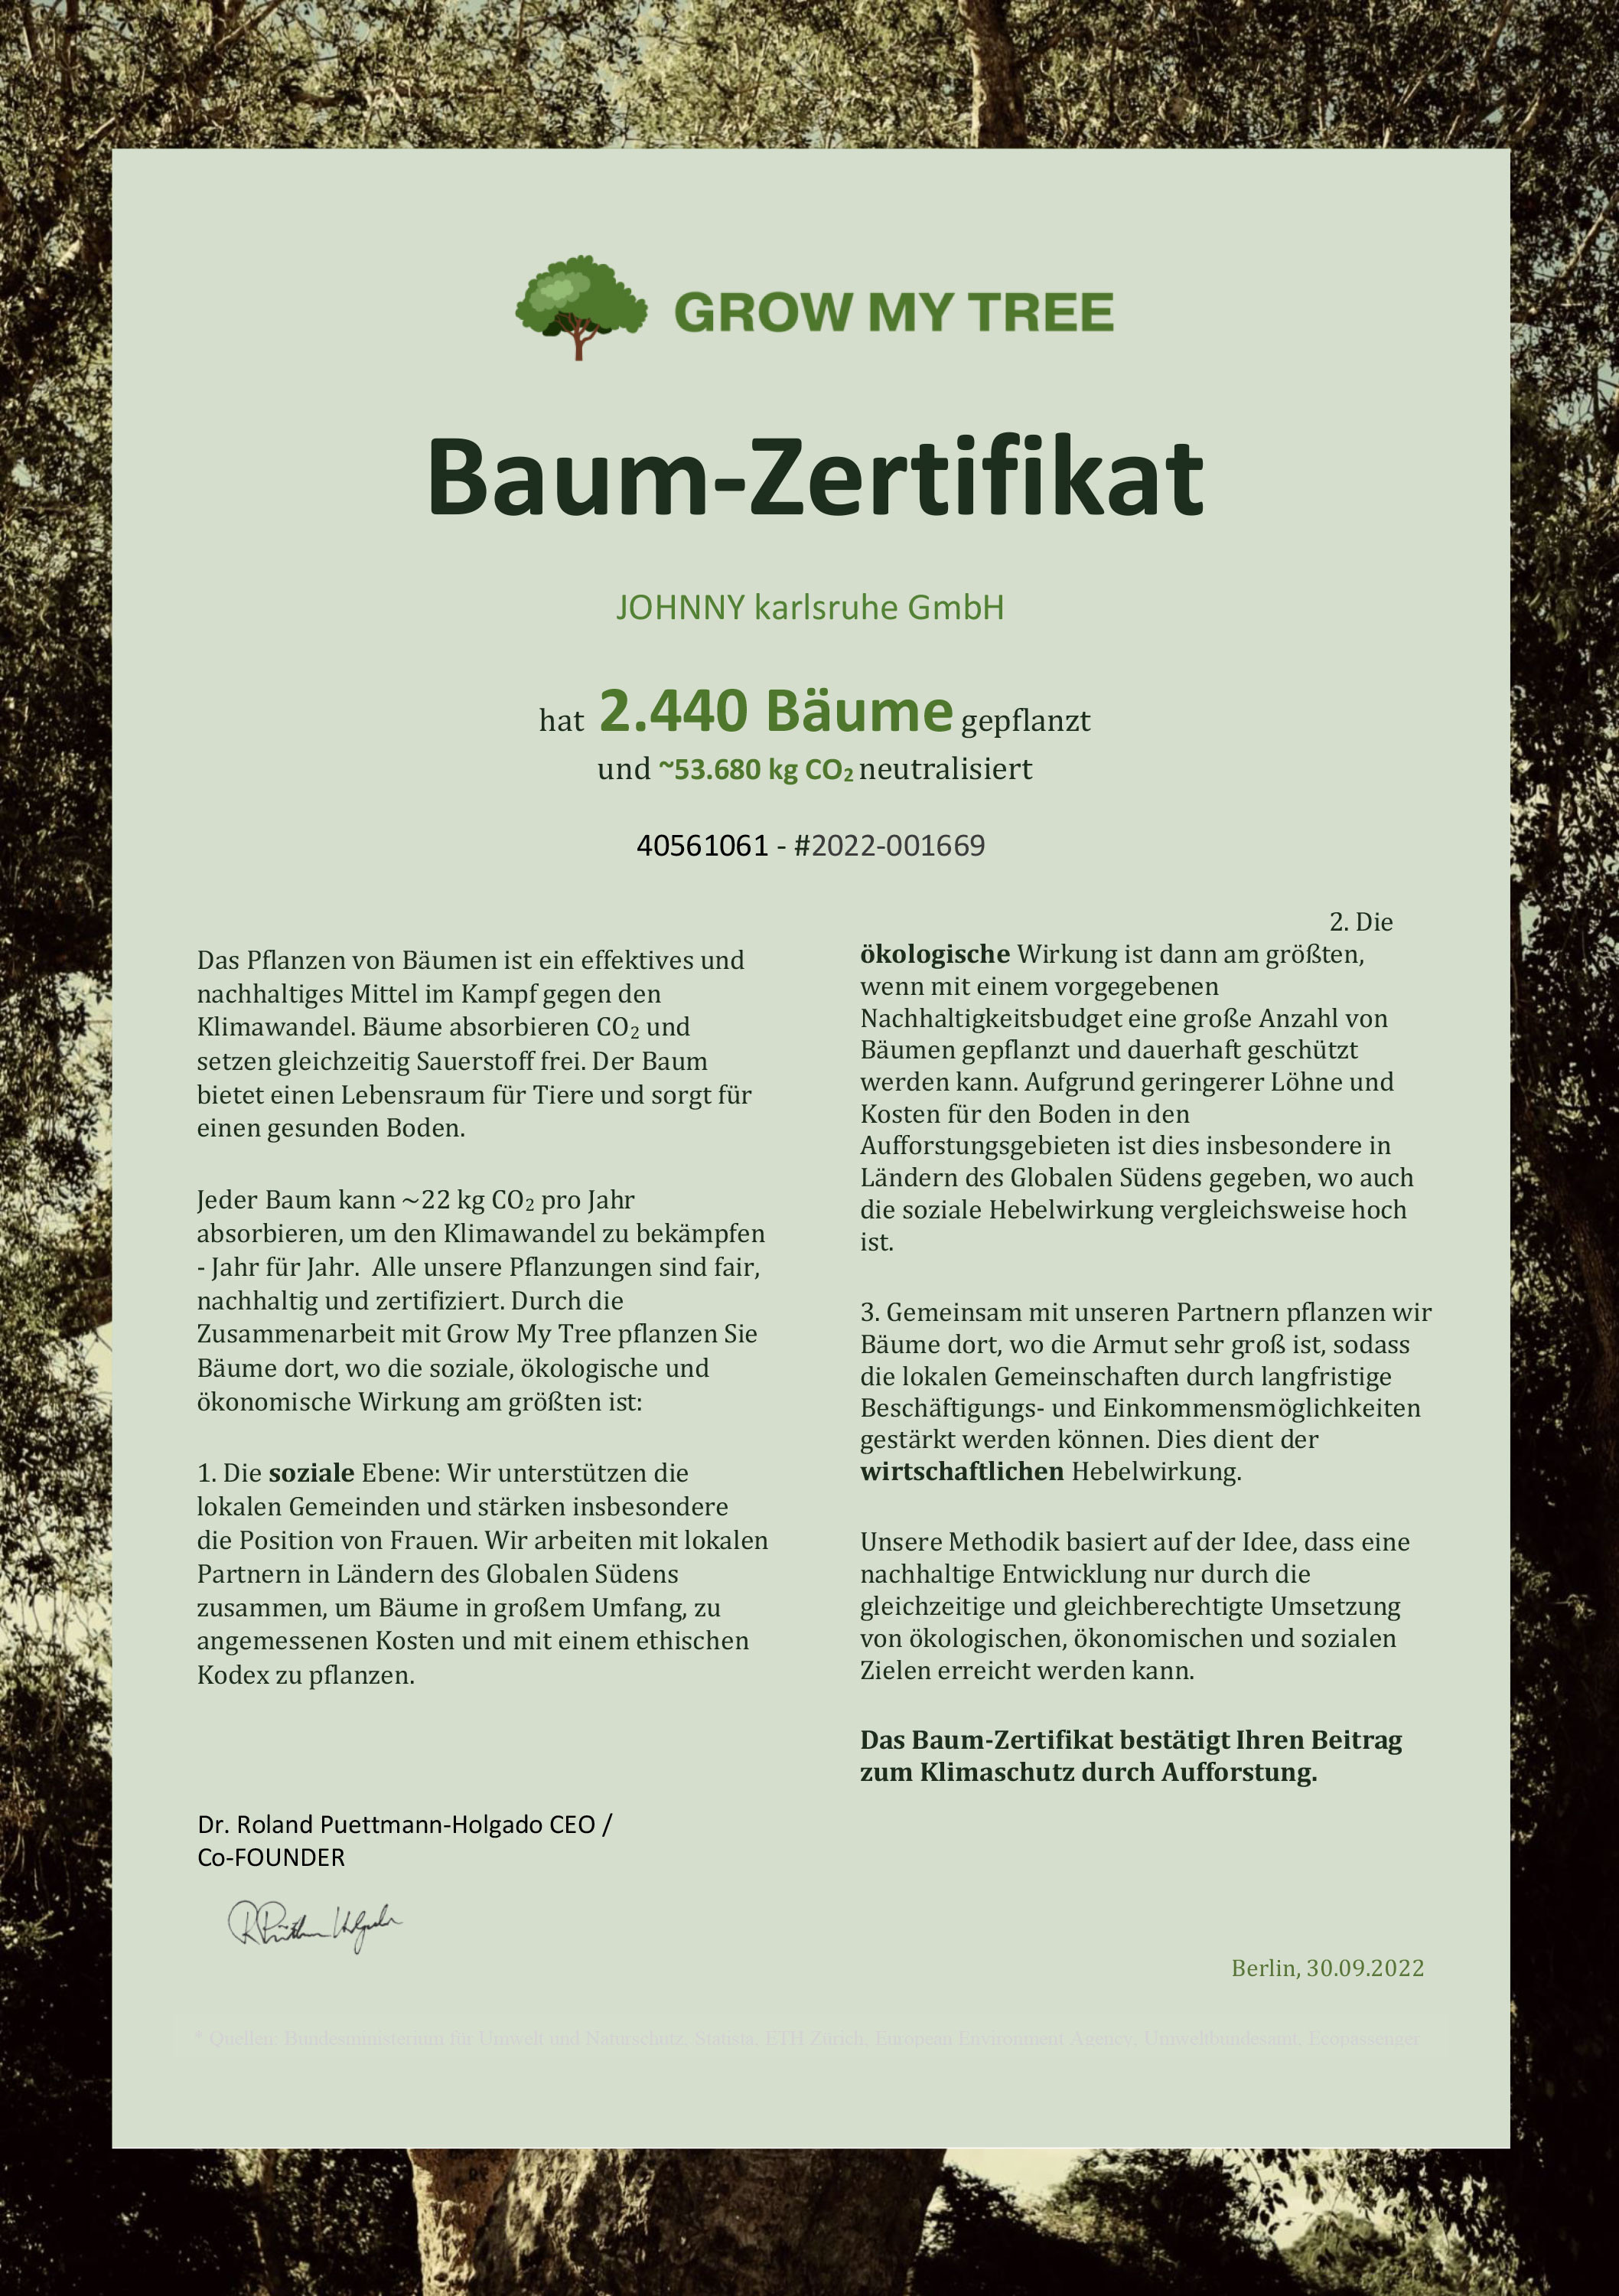 JOHNNY-karlsruhe-GmbH_baum-zertifikat.jpg